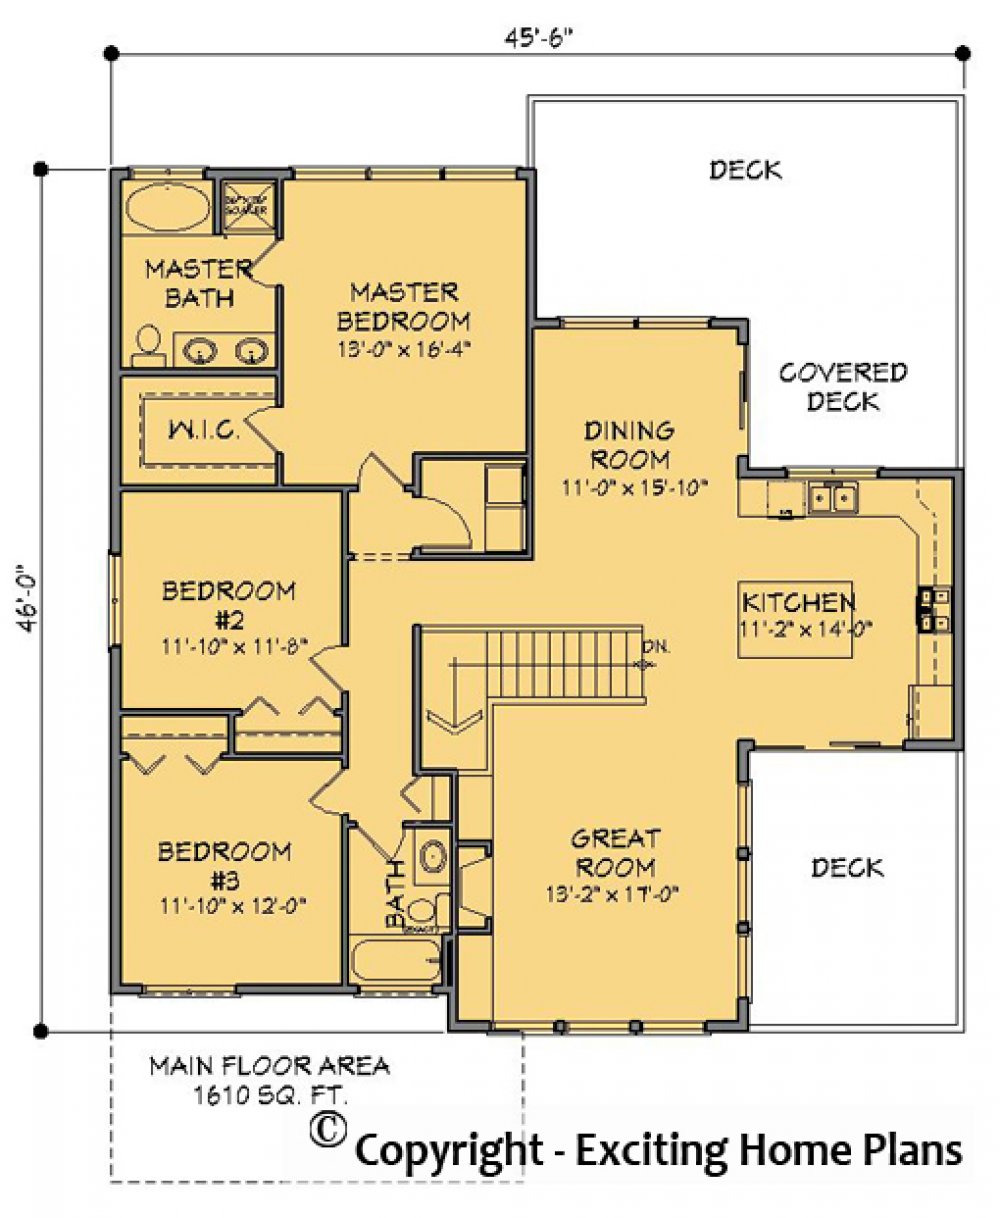 House Plan E1644-10 Main Floor Plan